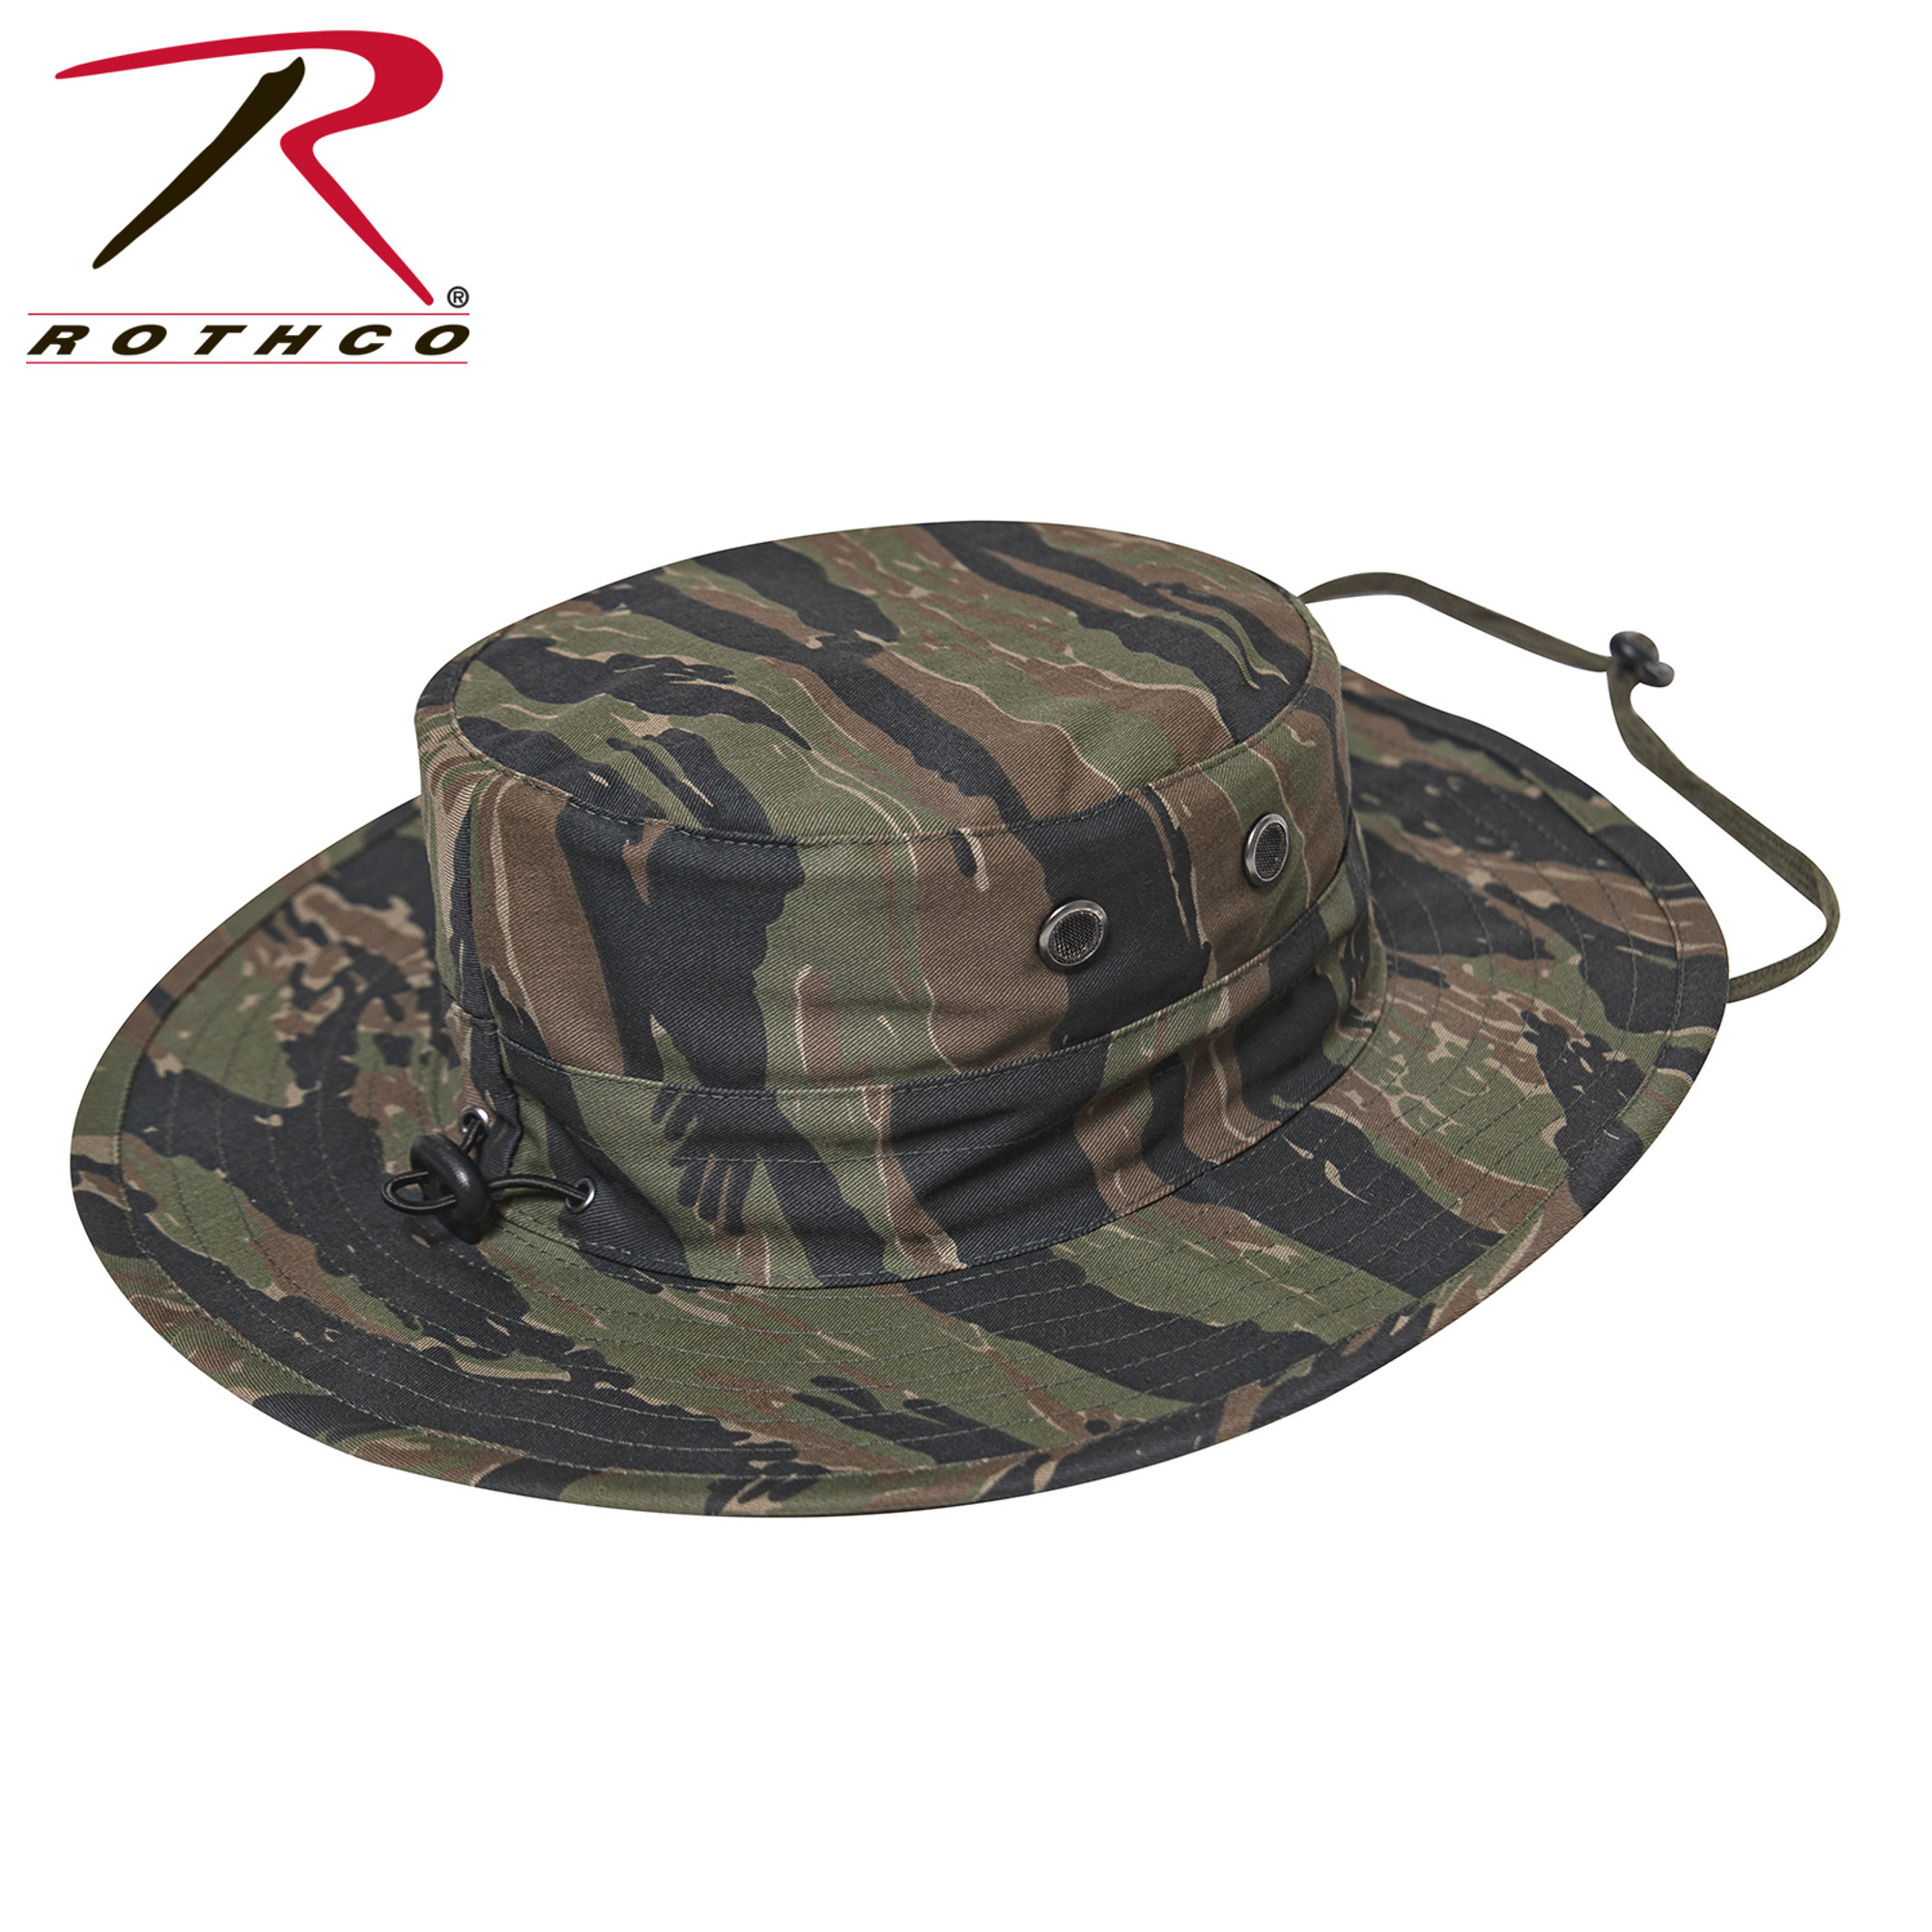 Rothco Adjustable Boonie Hat - Tiger Stripe